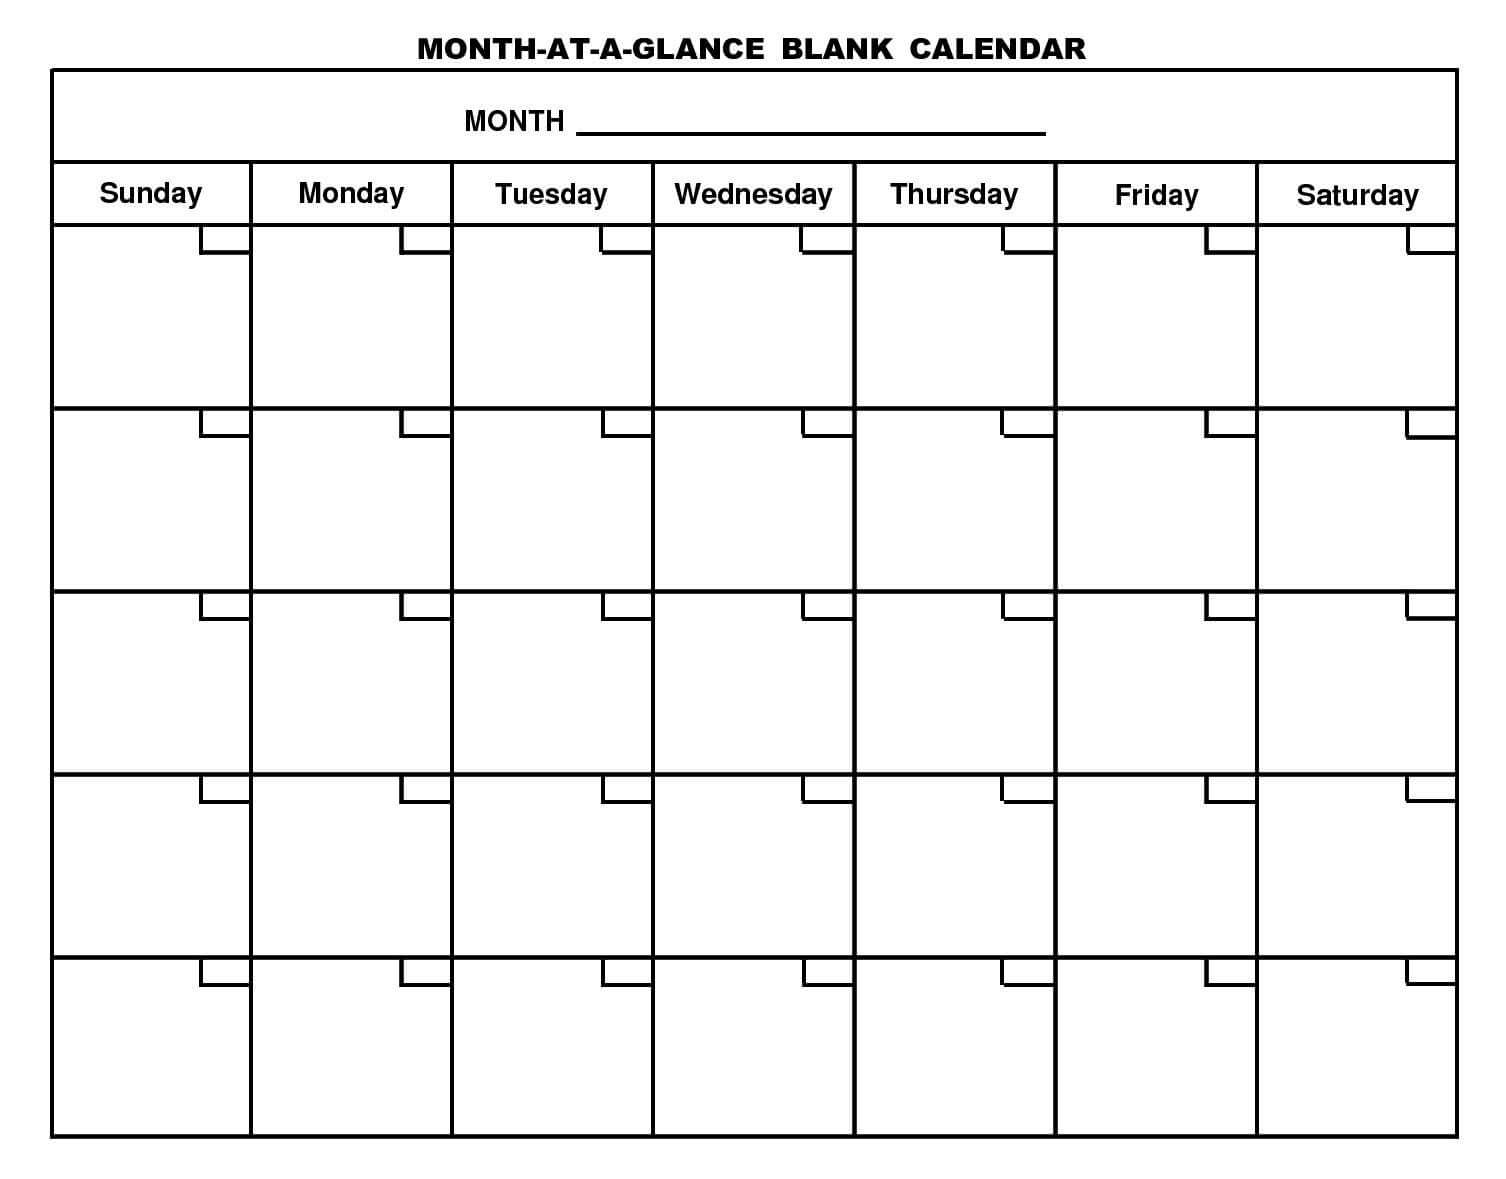 month-at-a-glance-blank-calendar-template-best-template-ideas